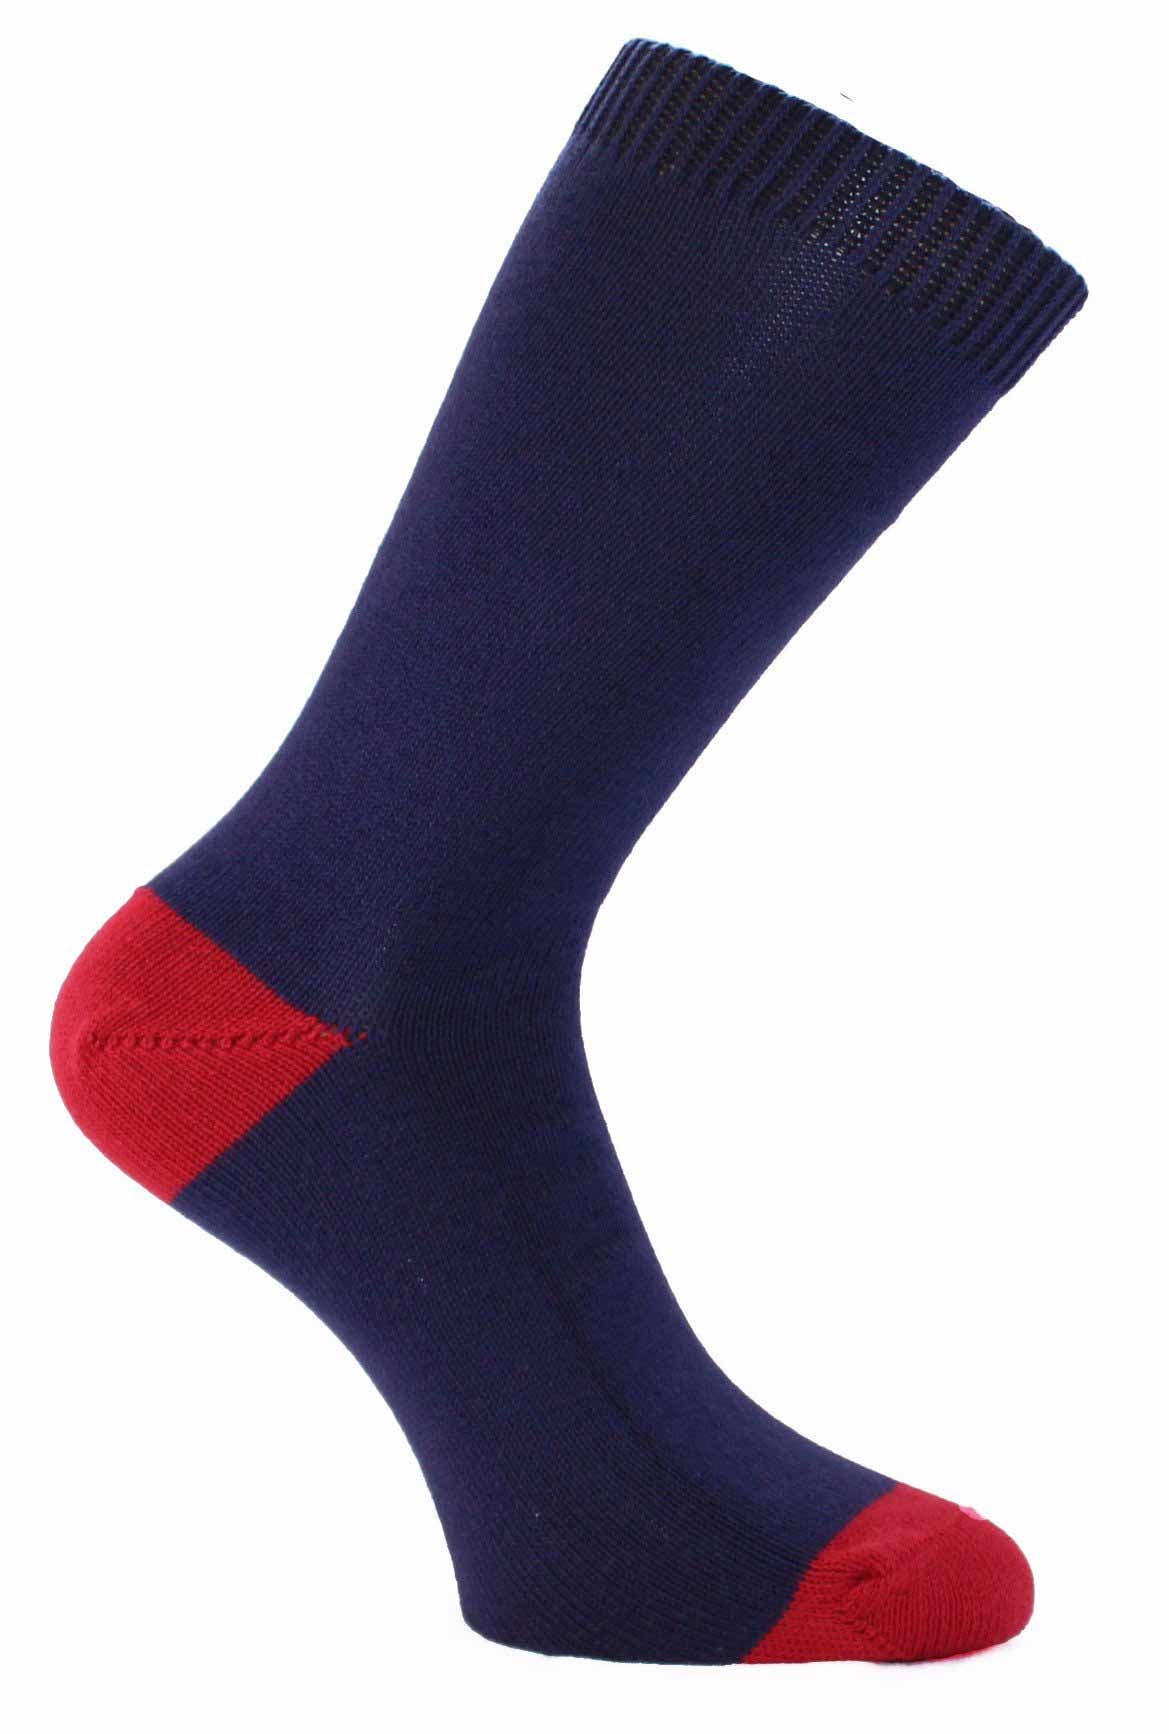 Palmerston Blue Socks - Seamless Toe Design